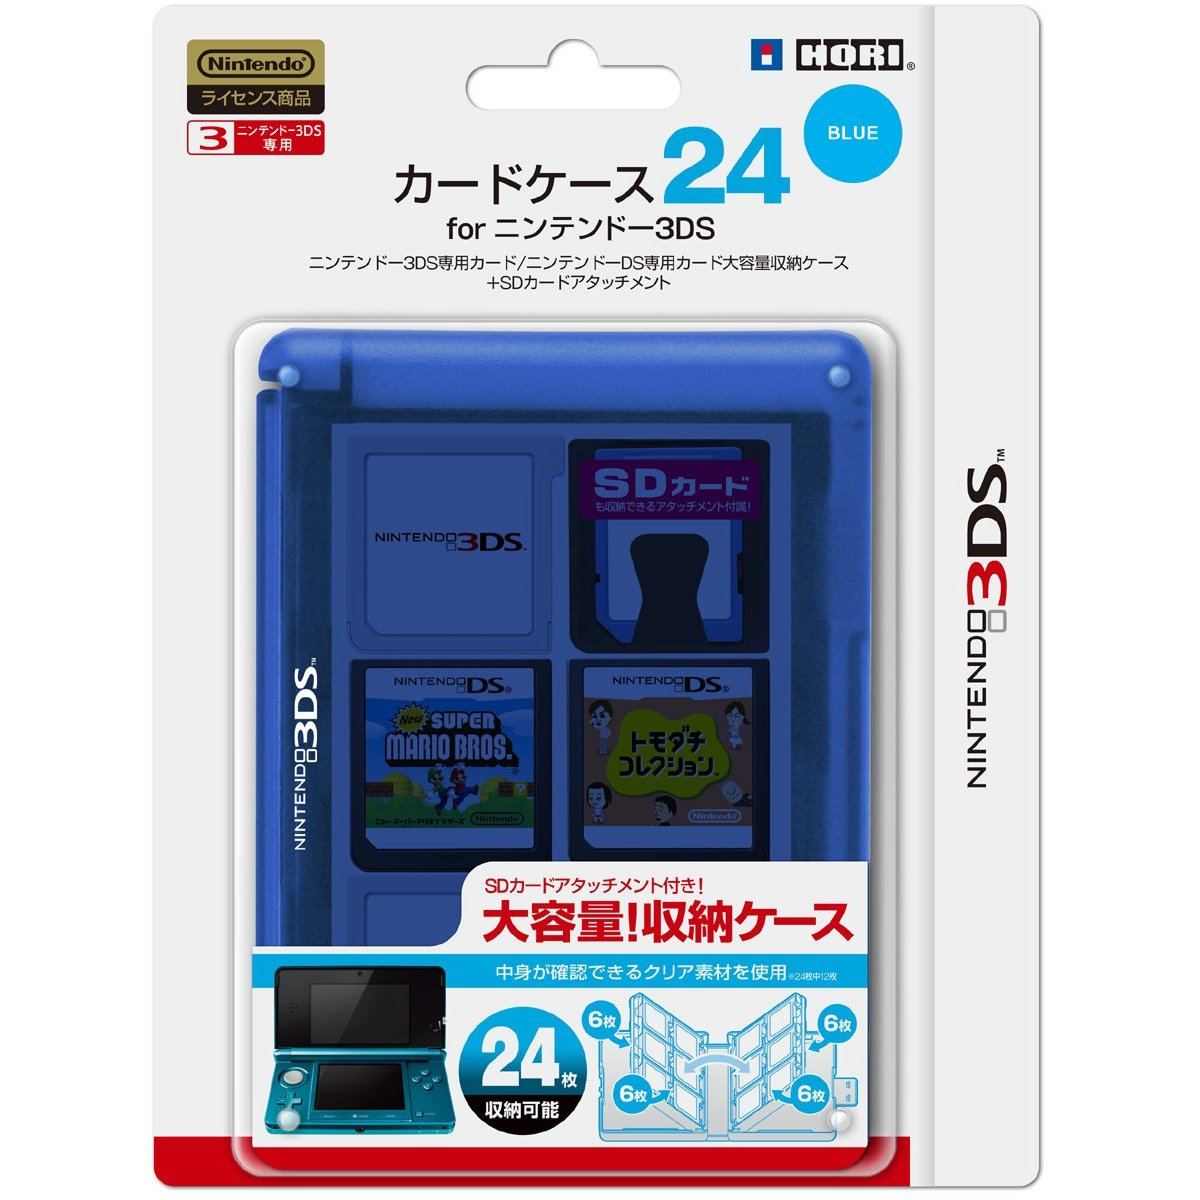 3DS Card Case 24 (Blue) for Nintendo 3DS